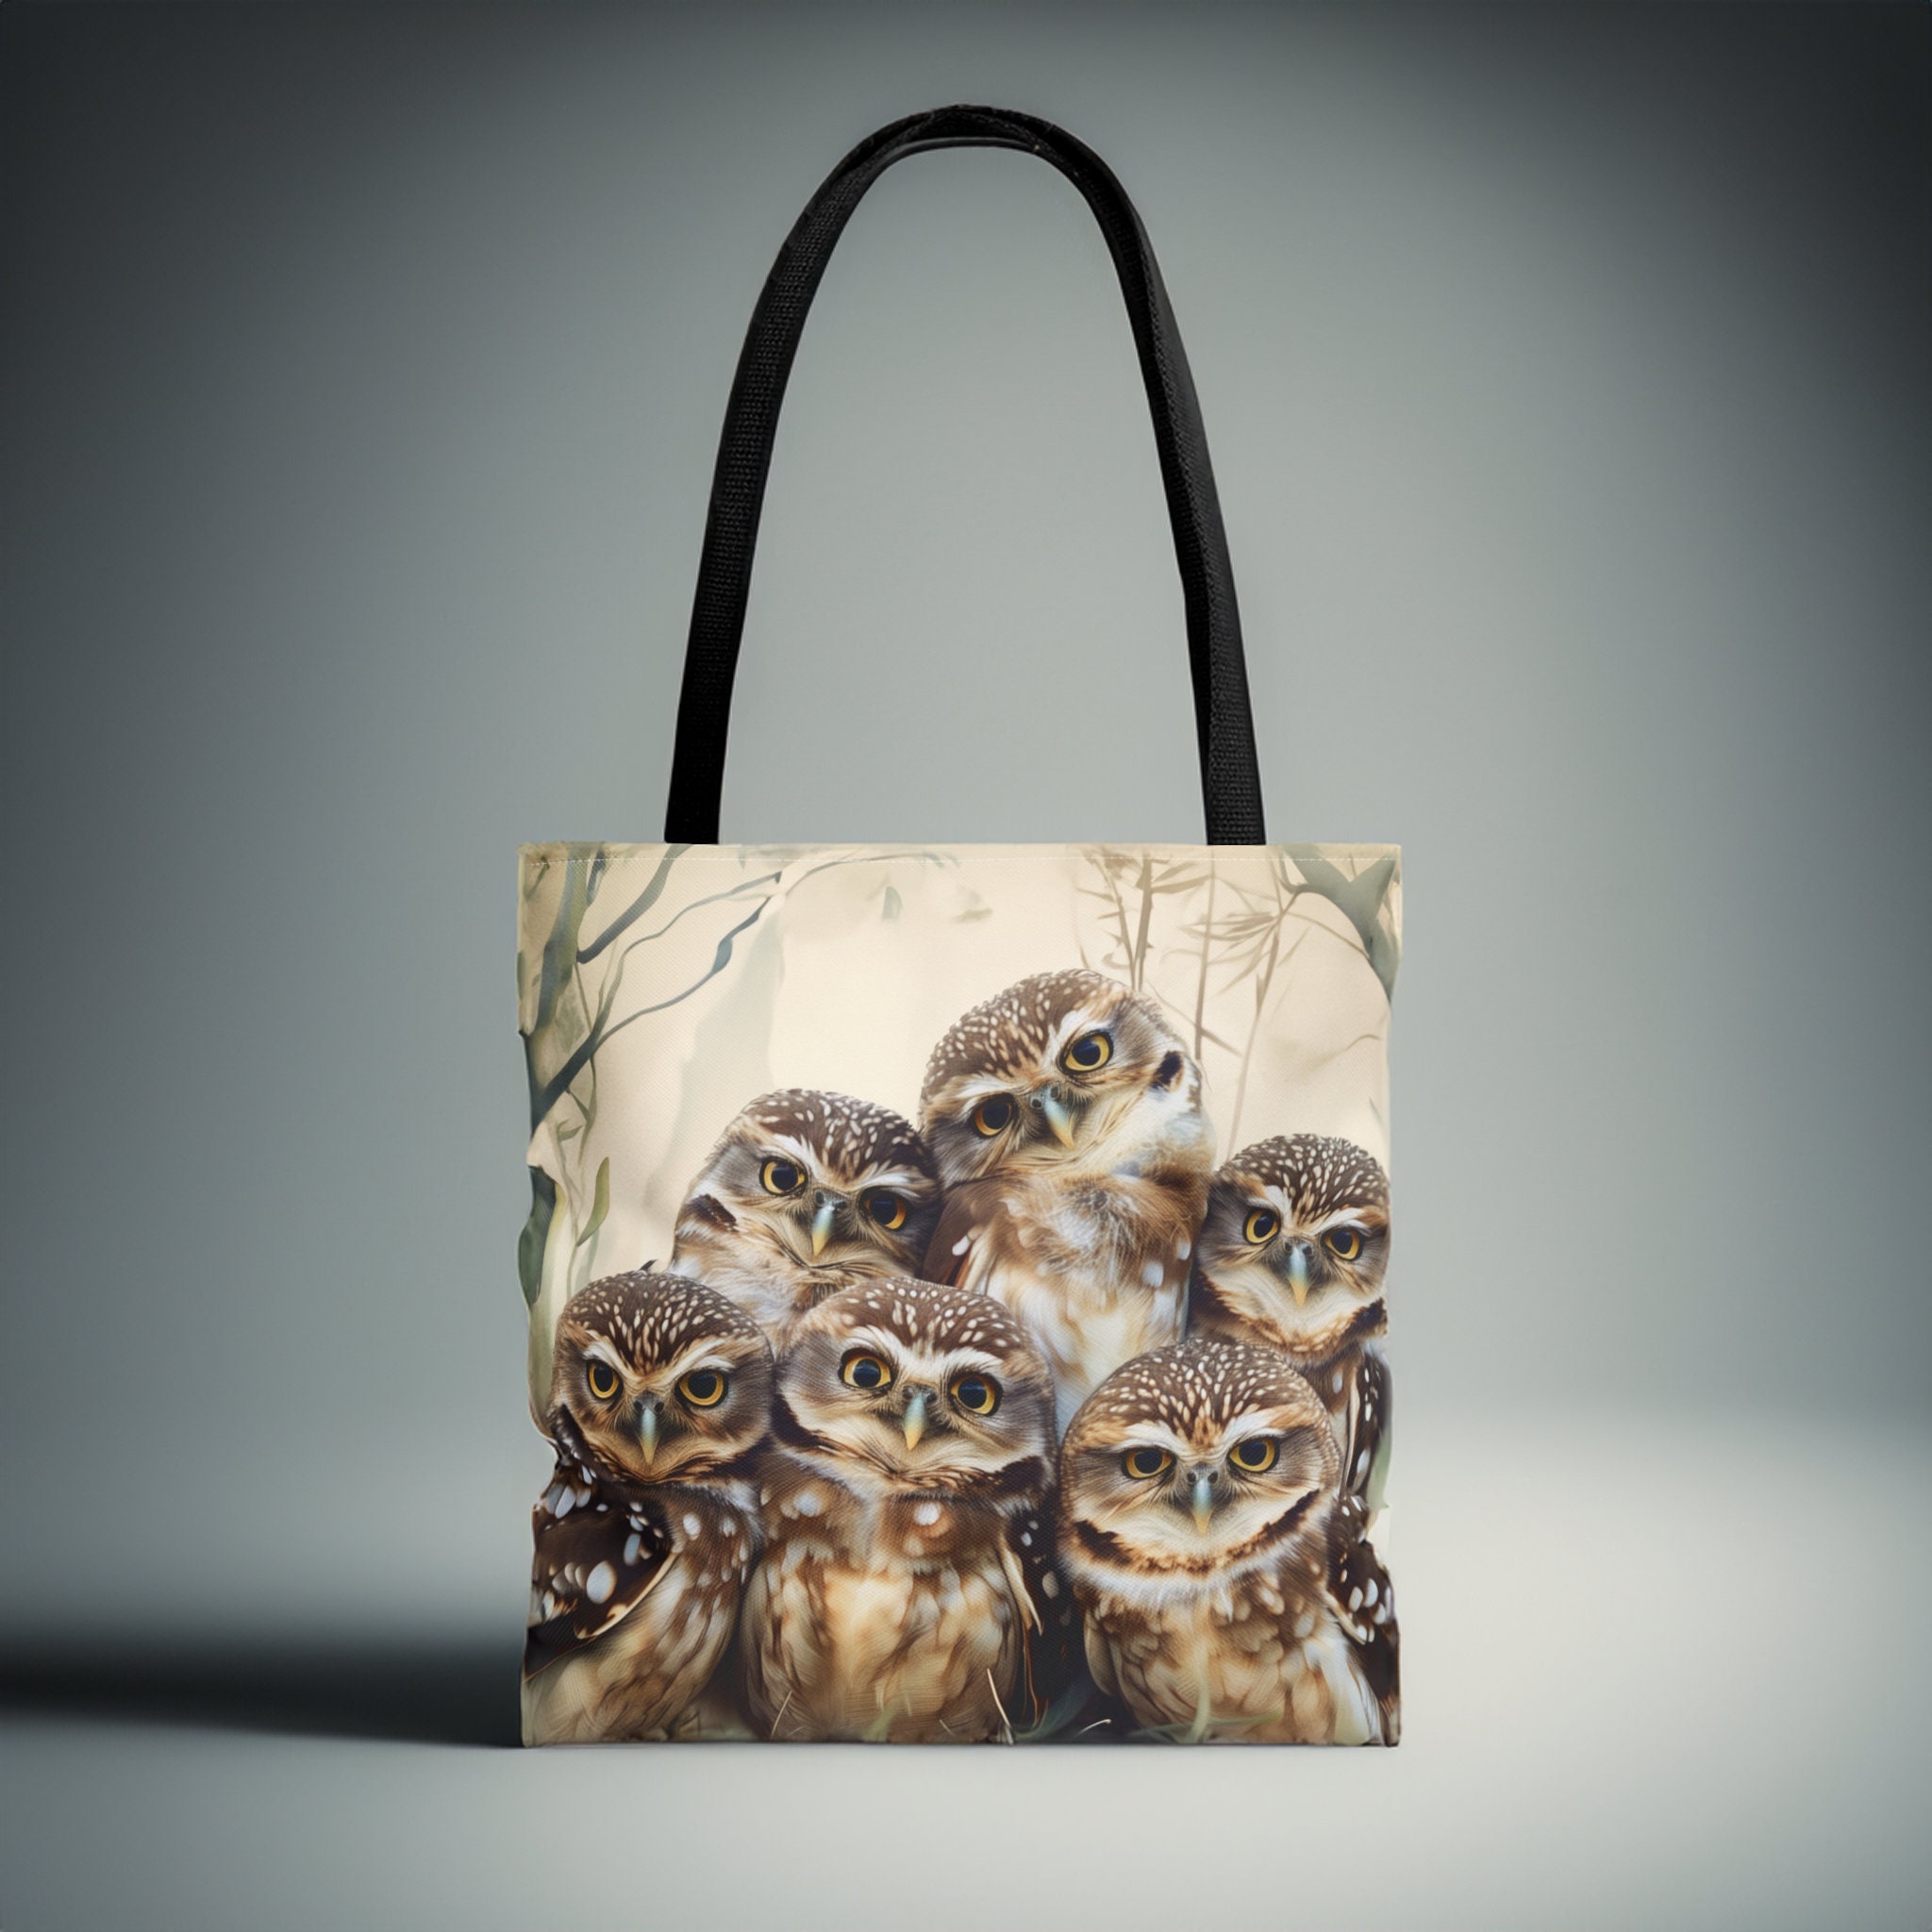 Cute Owl Tote Bag For Owl Lover Tote Bag Gift Summer Bag Owl Original Art Gift For Best Friend Femal